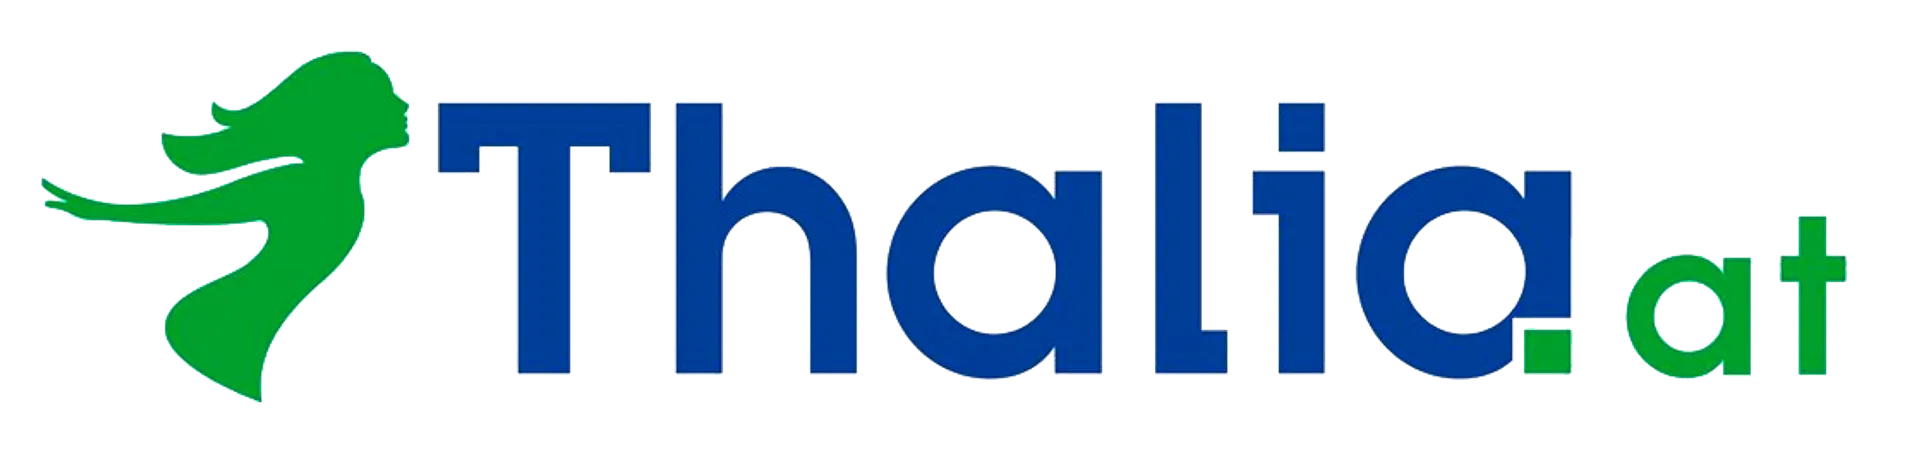 THALIA logo die aktuell Flugblatt